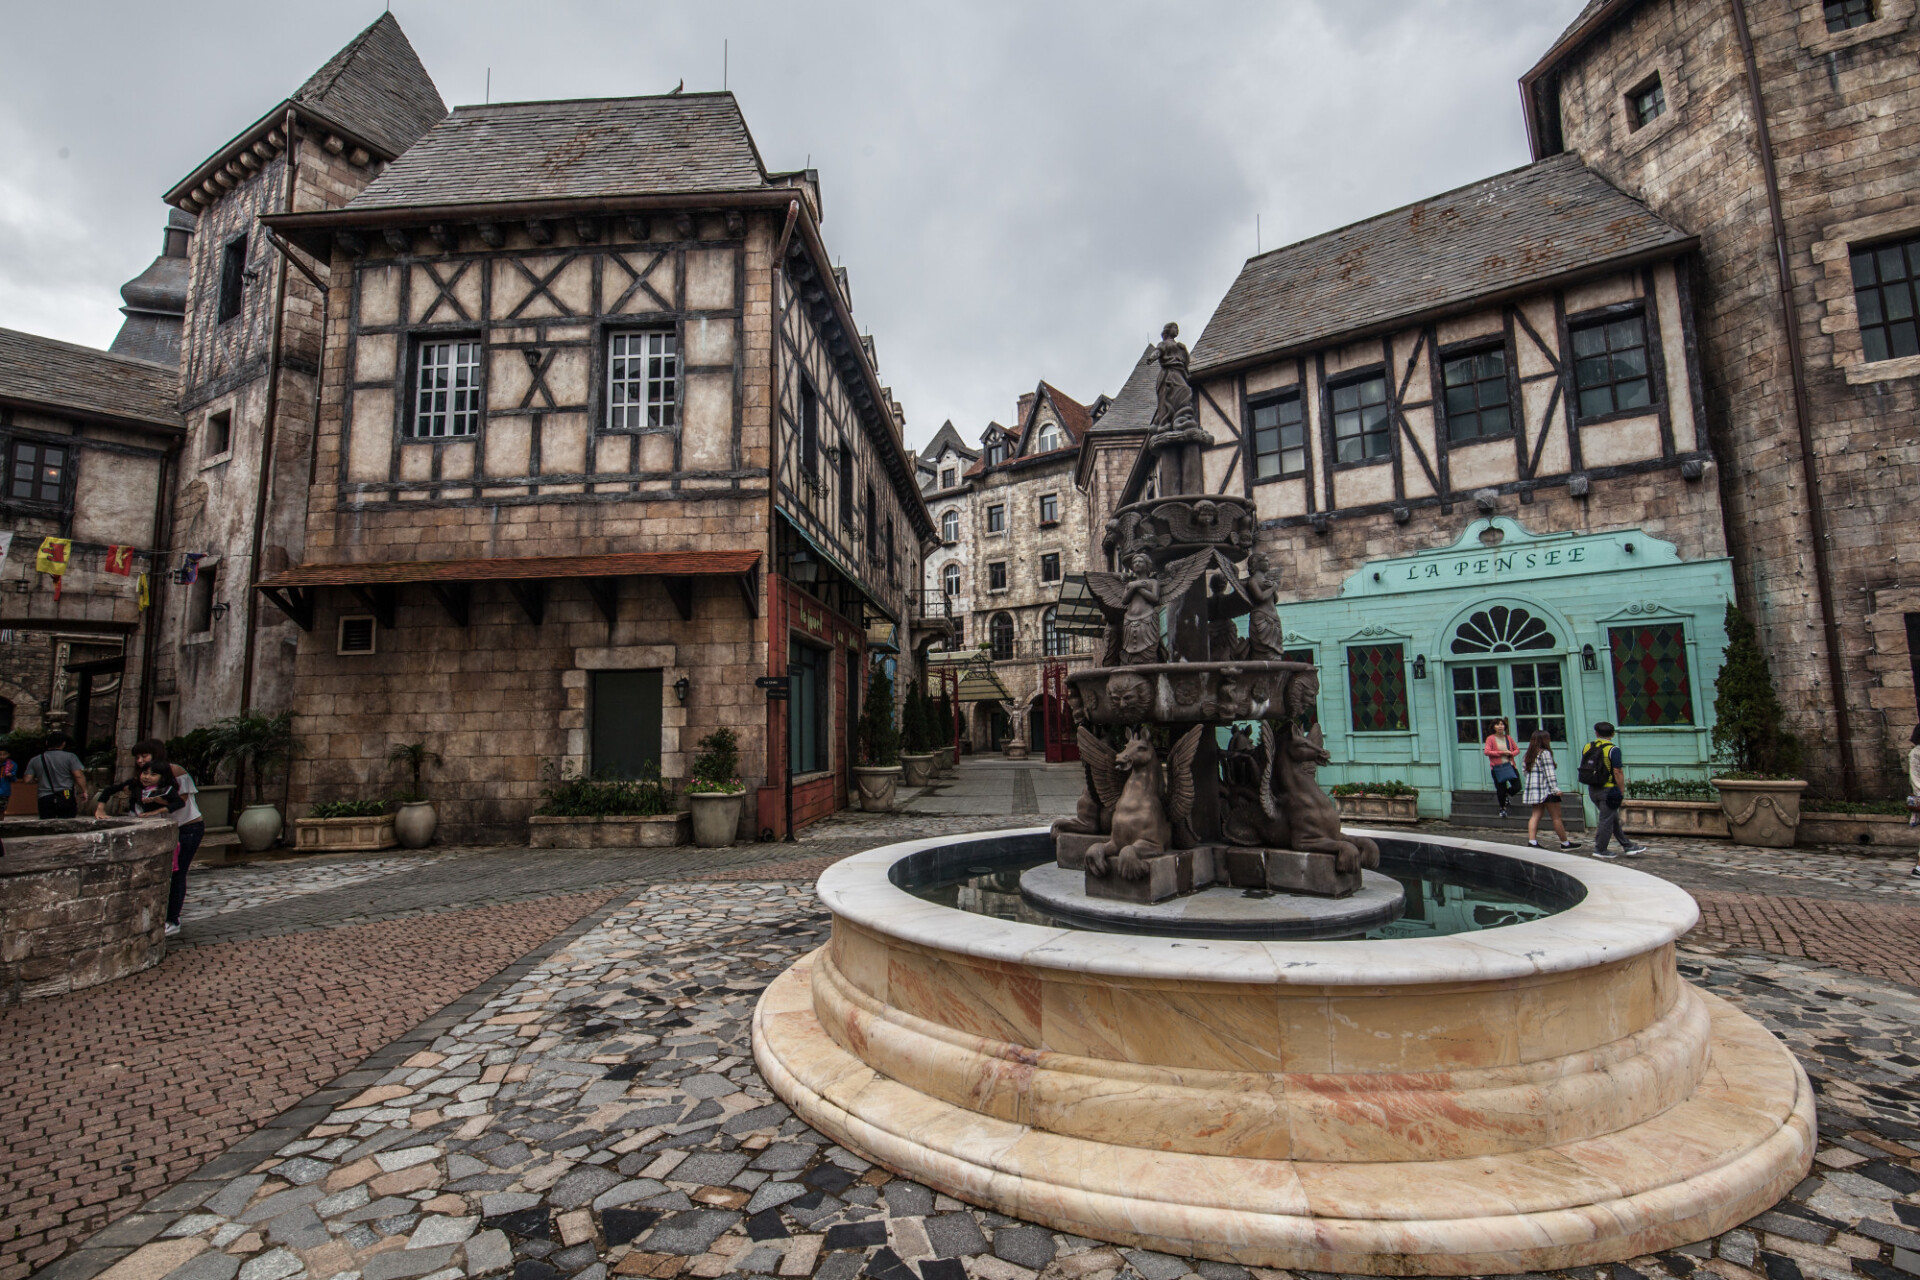 medieval market square - Photo #7677 - motosha | Free Stock Photos